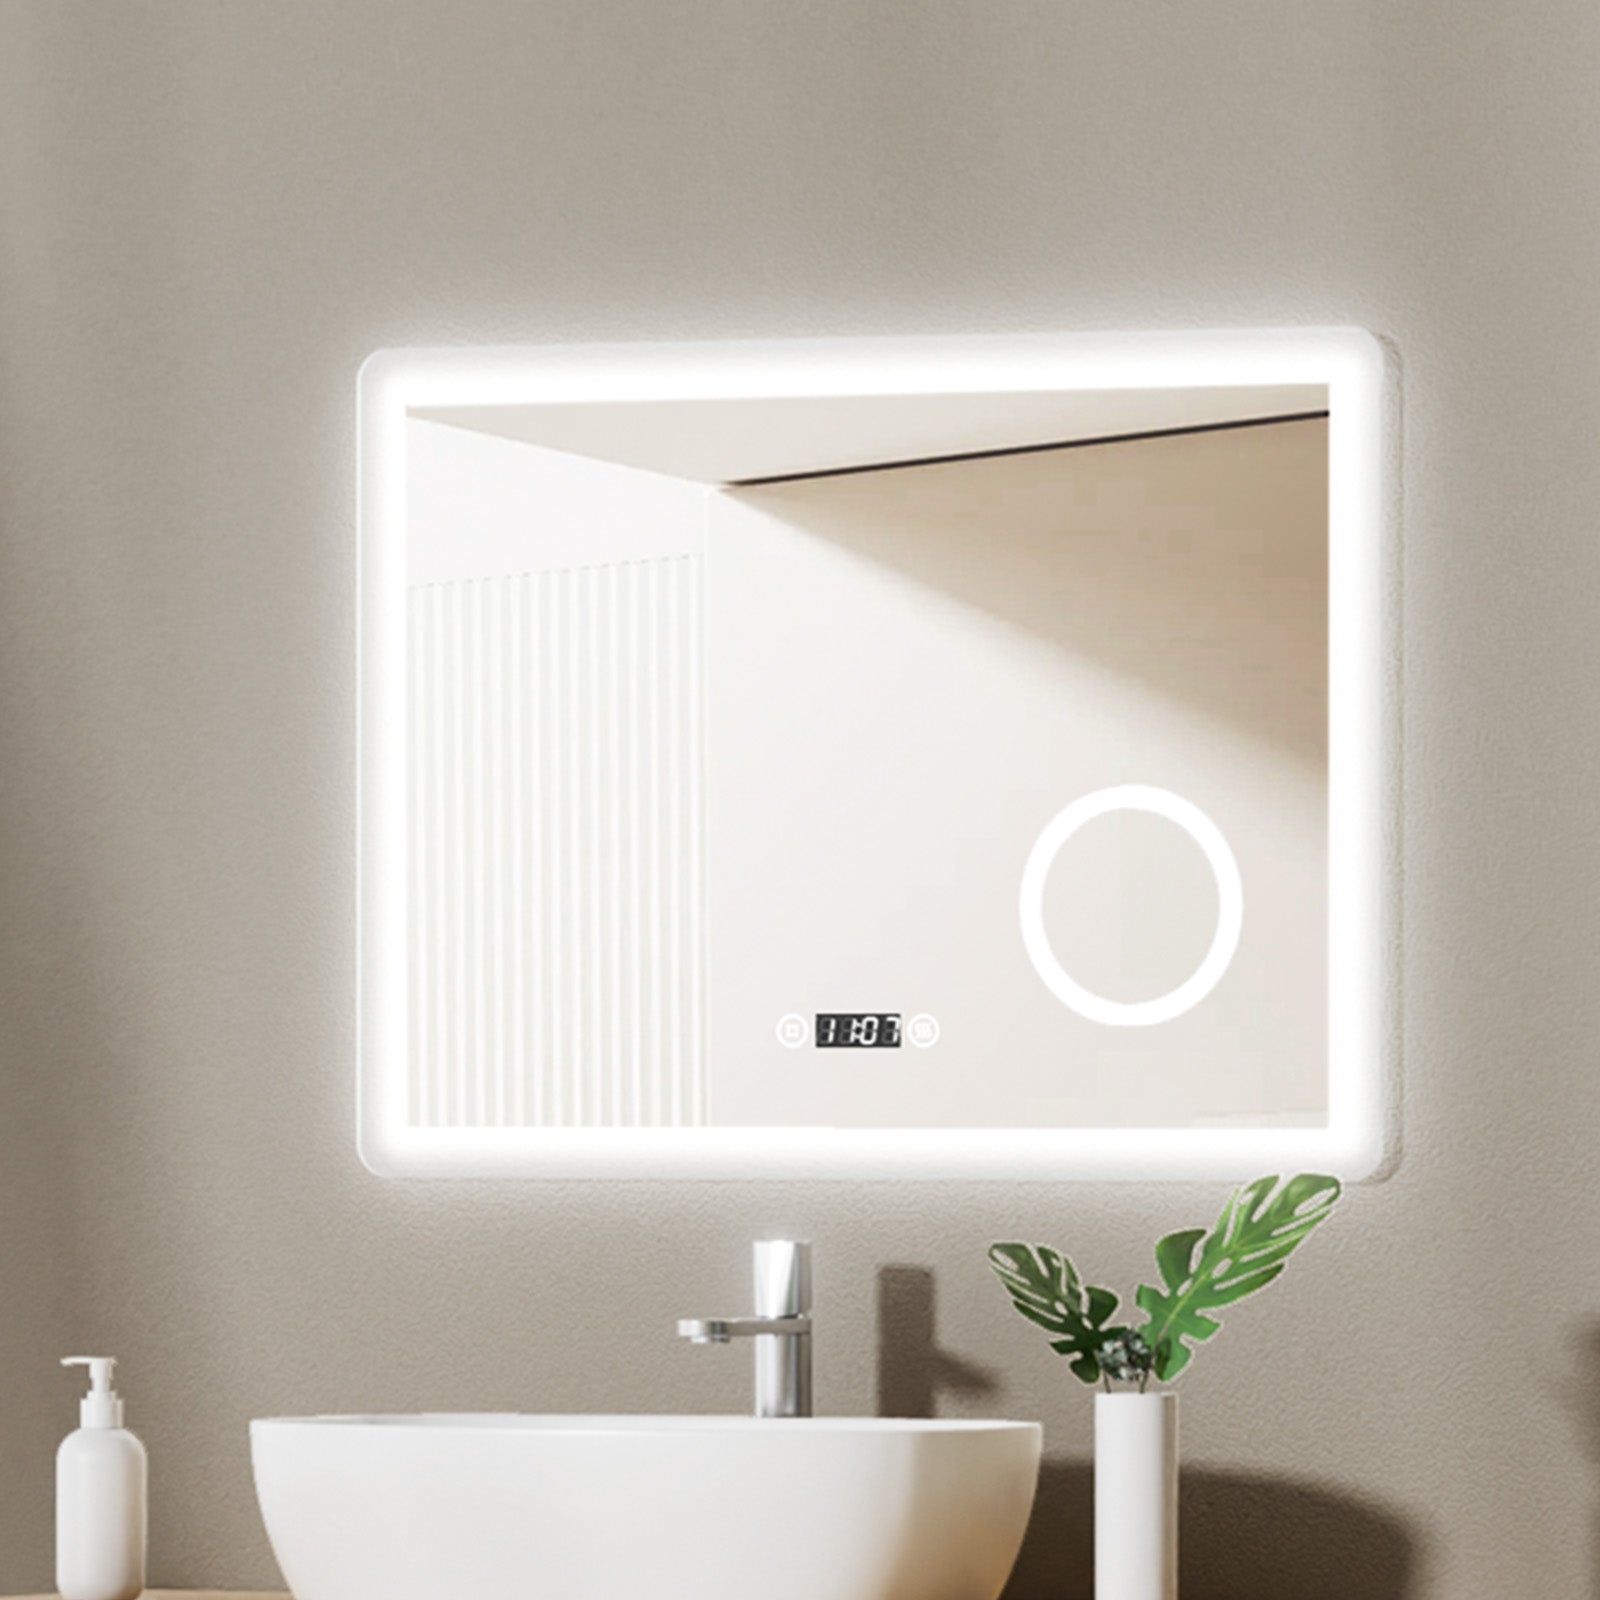 EMKE LED Badspiegel „LeeMi πX Plus“ 80x60cm, 3 Lichtfarben, Touch, Dimmbar, Beschlagfrei, 3x Lupe, Uhr